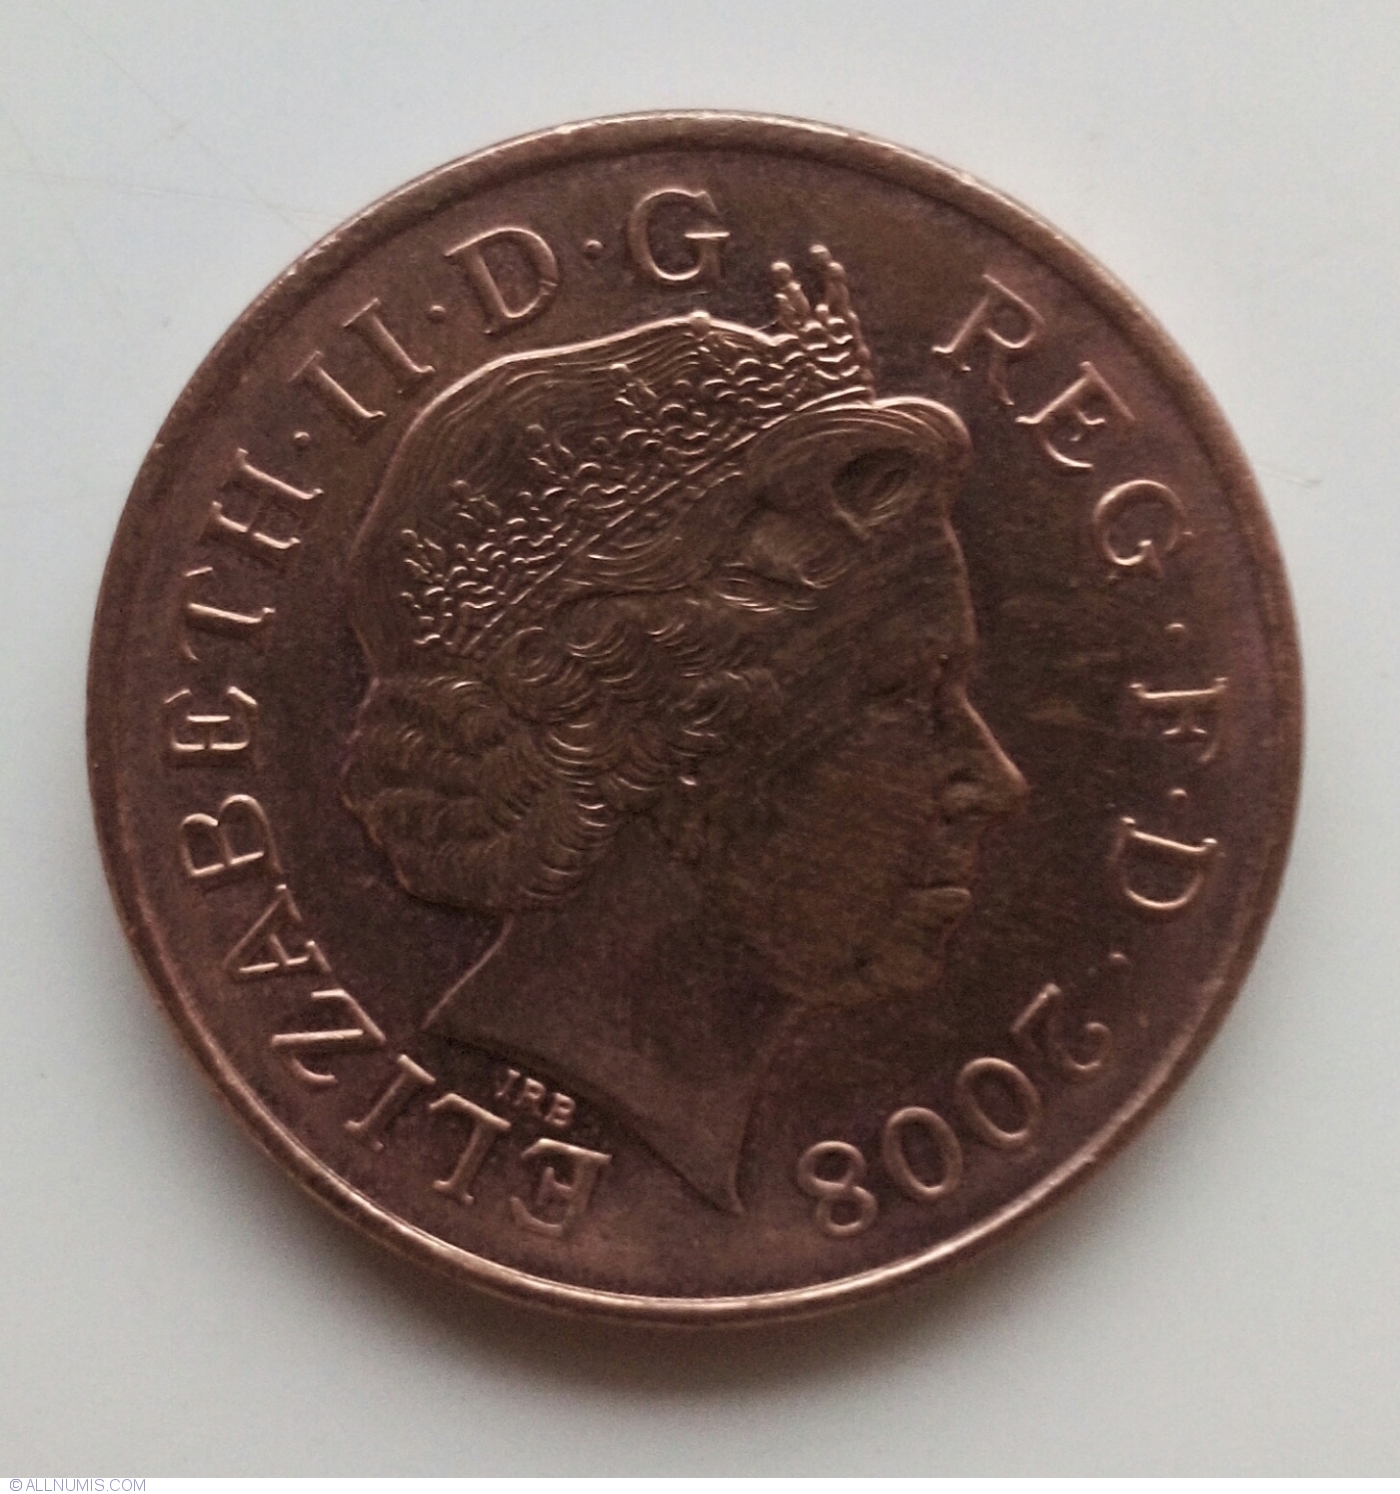 2 Pence 2008, Elizabeth II (1952-present) - Great Britain ...